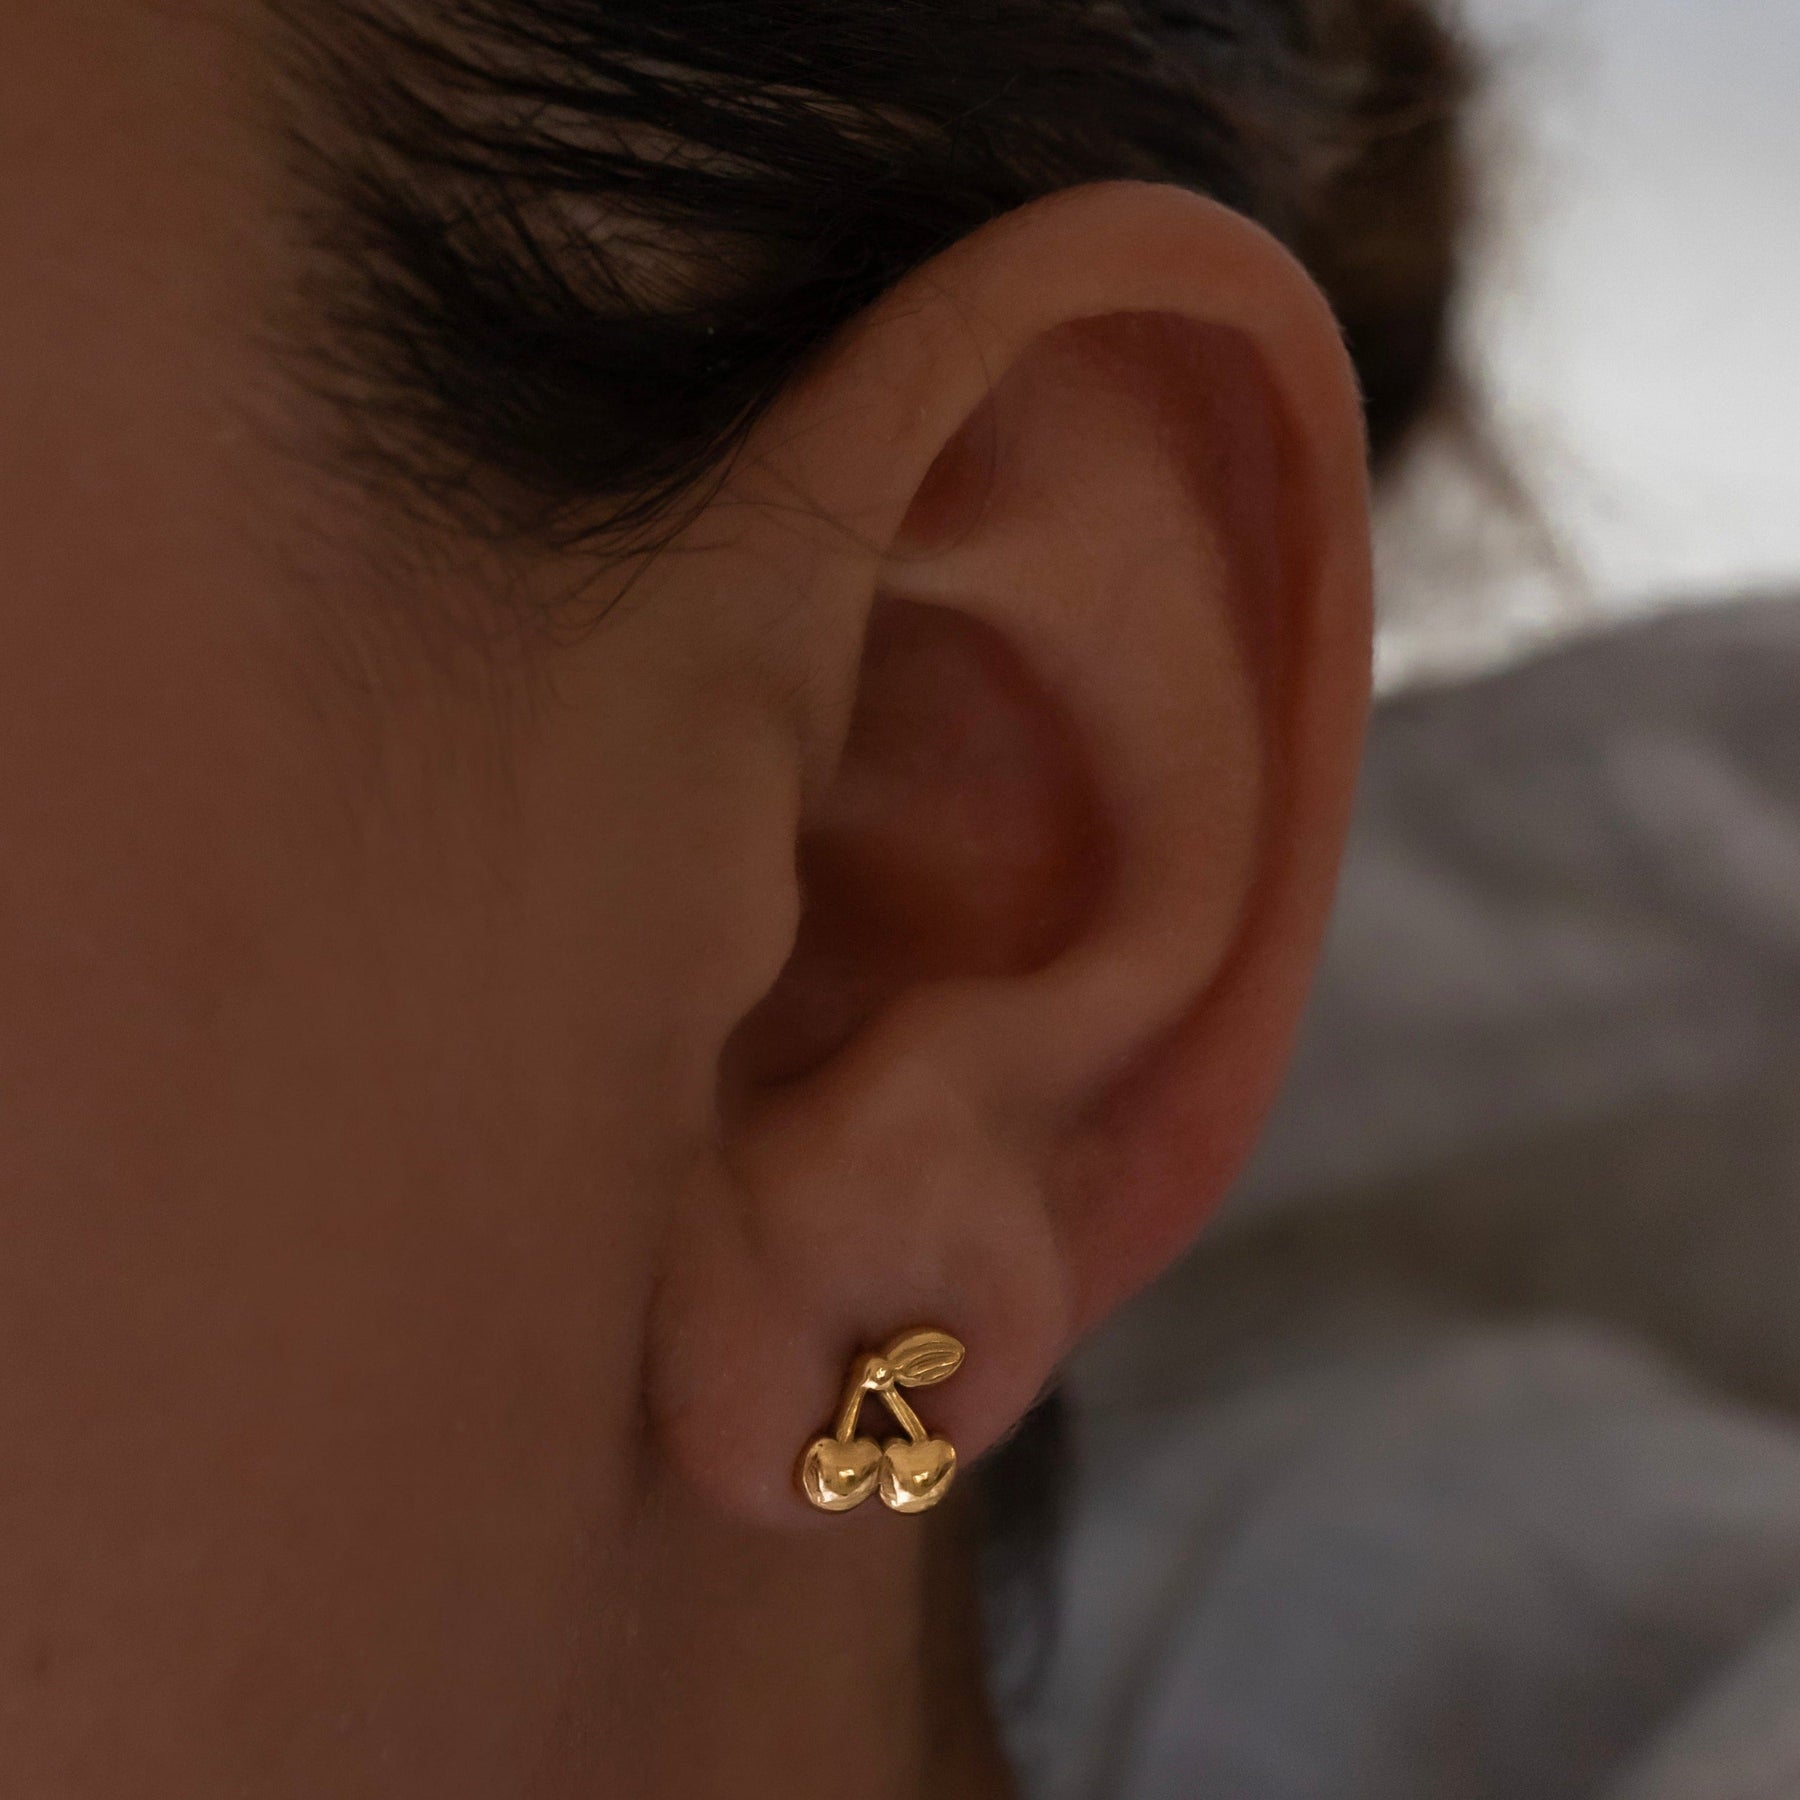 BohoMoon Stainless Steel Cherry Stud Earrings Gold